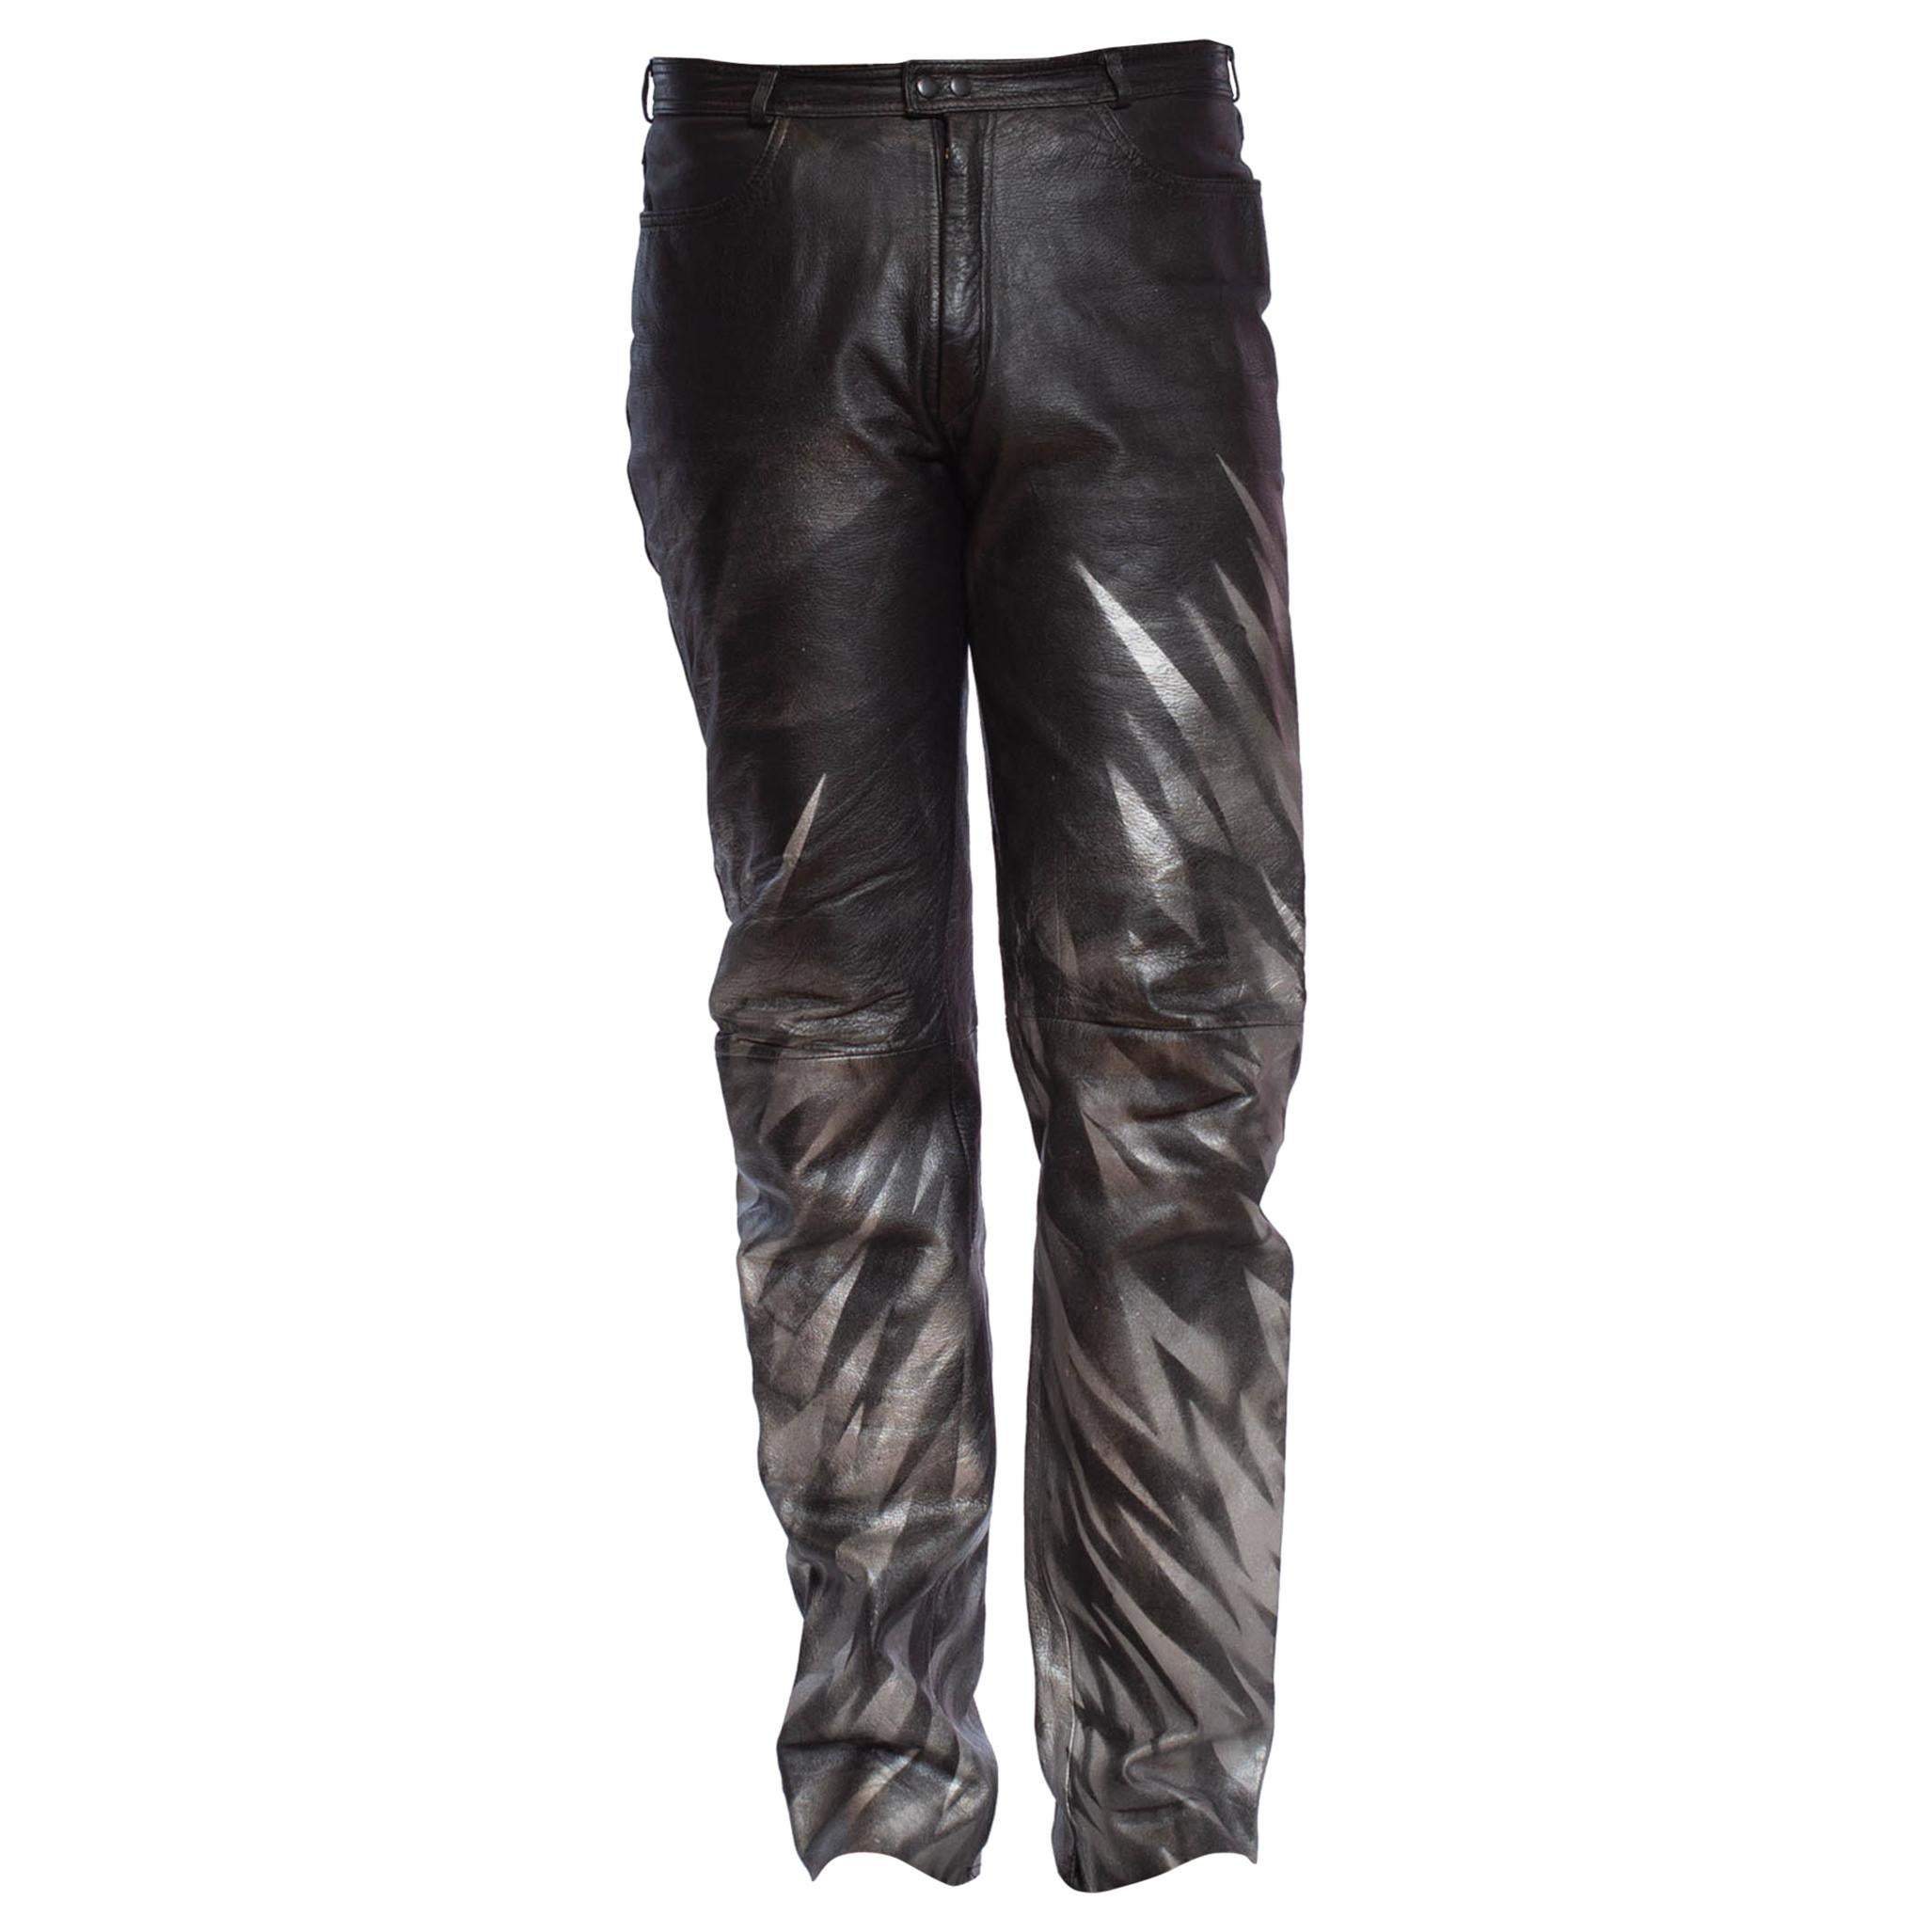 1980S Black Leather Men's Pants With Silver Metallic Graffiti